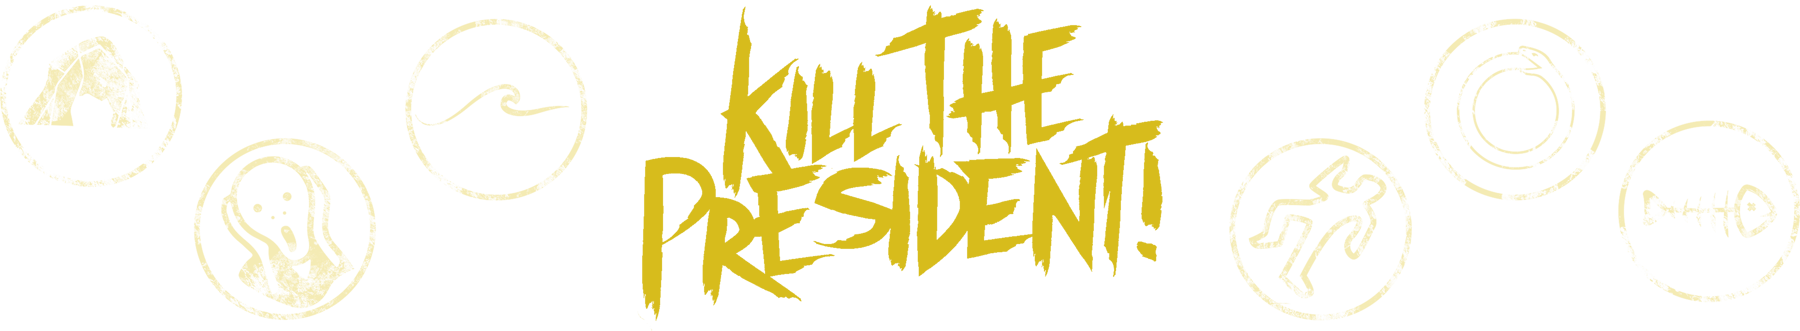 Kill The President!